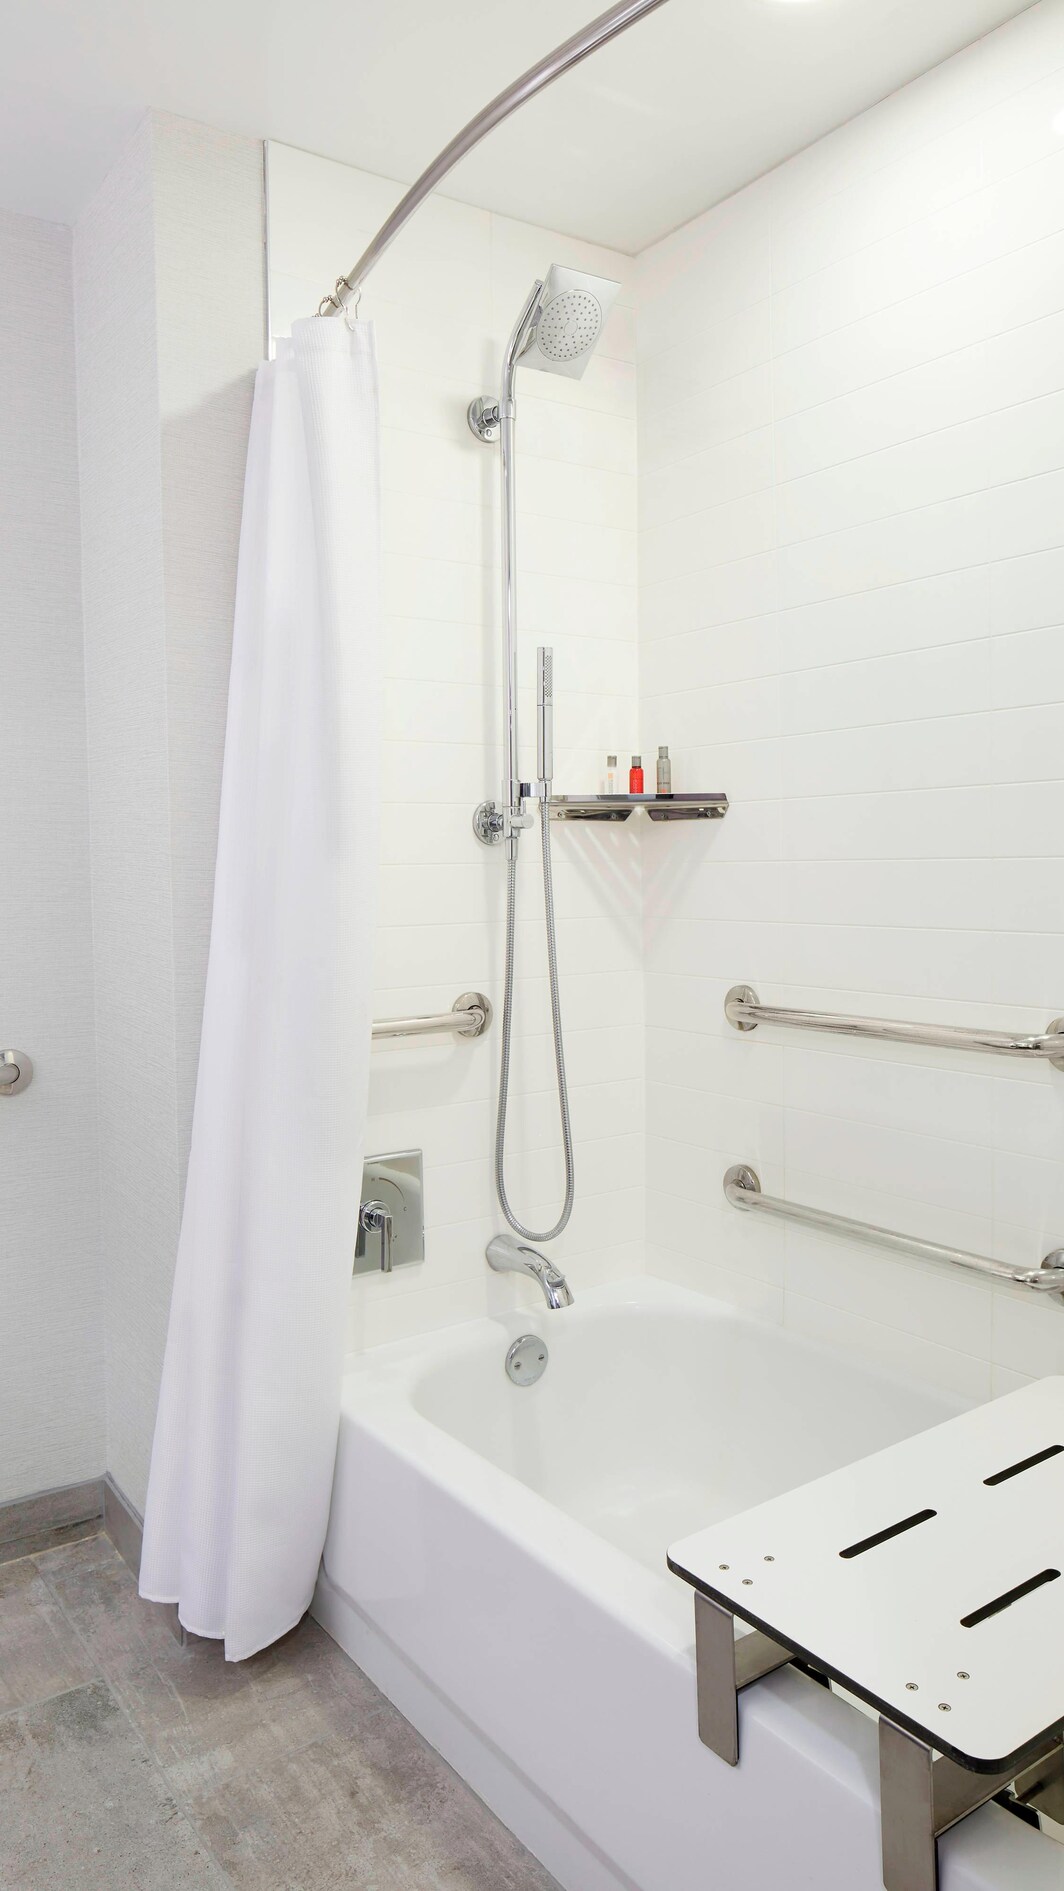 Accessible Bathroom - Shower/Tub